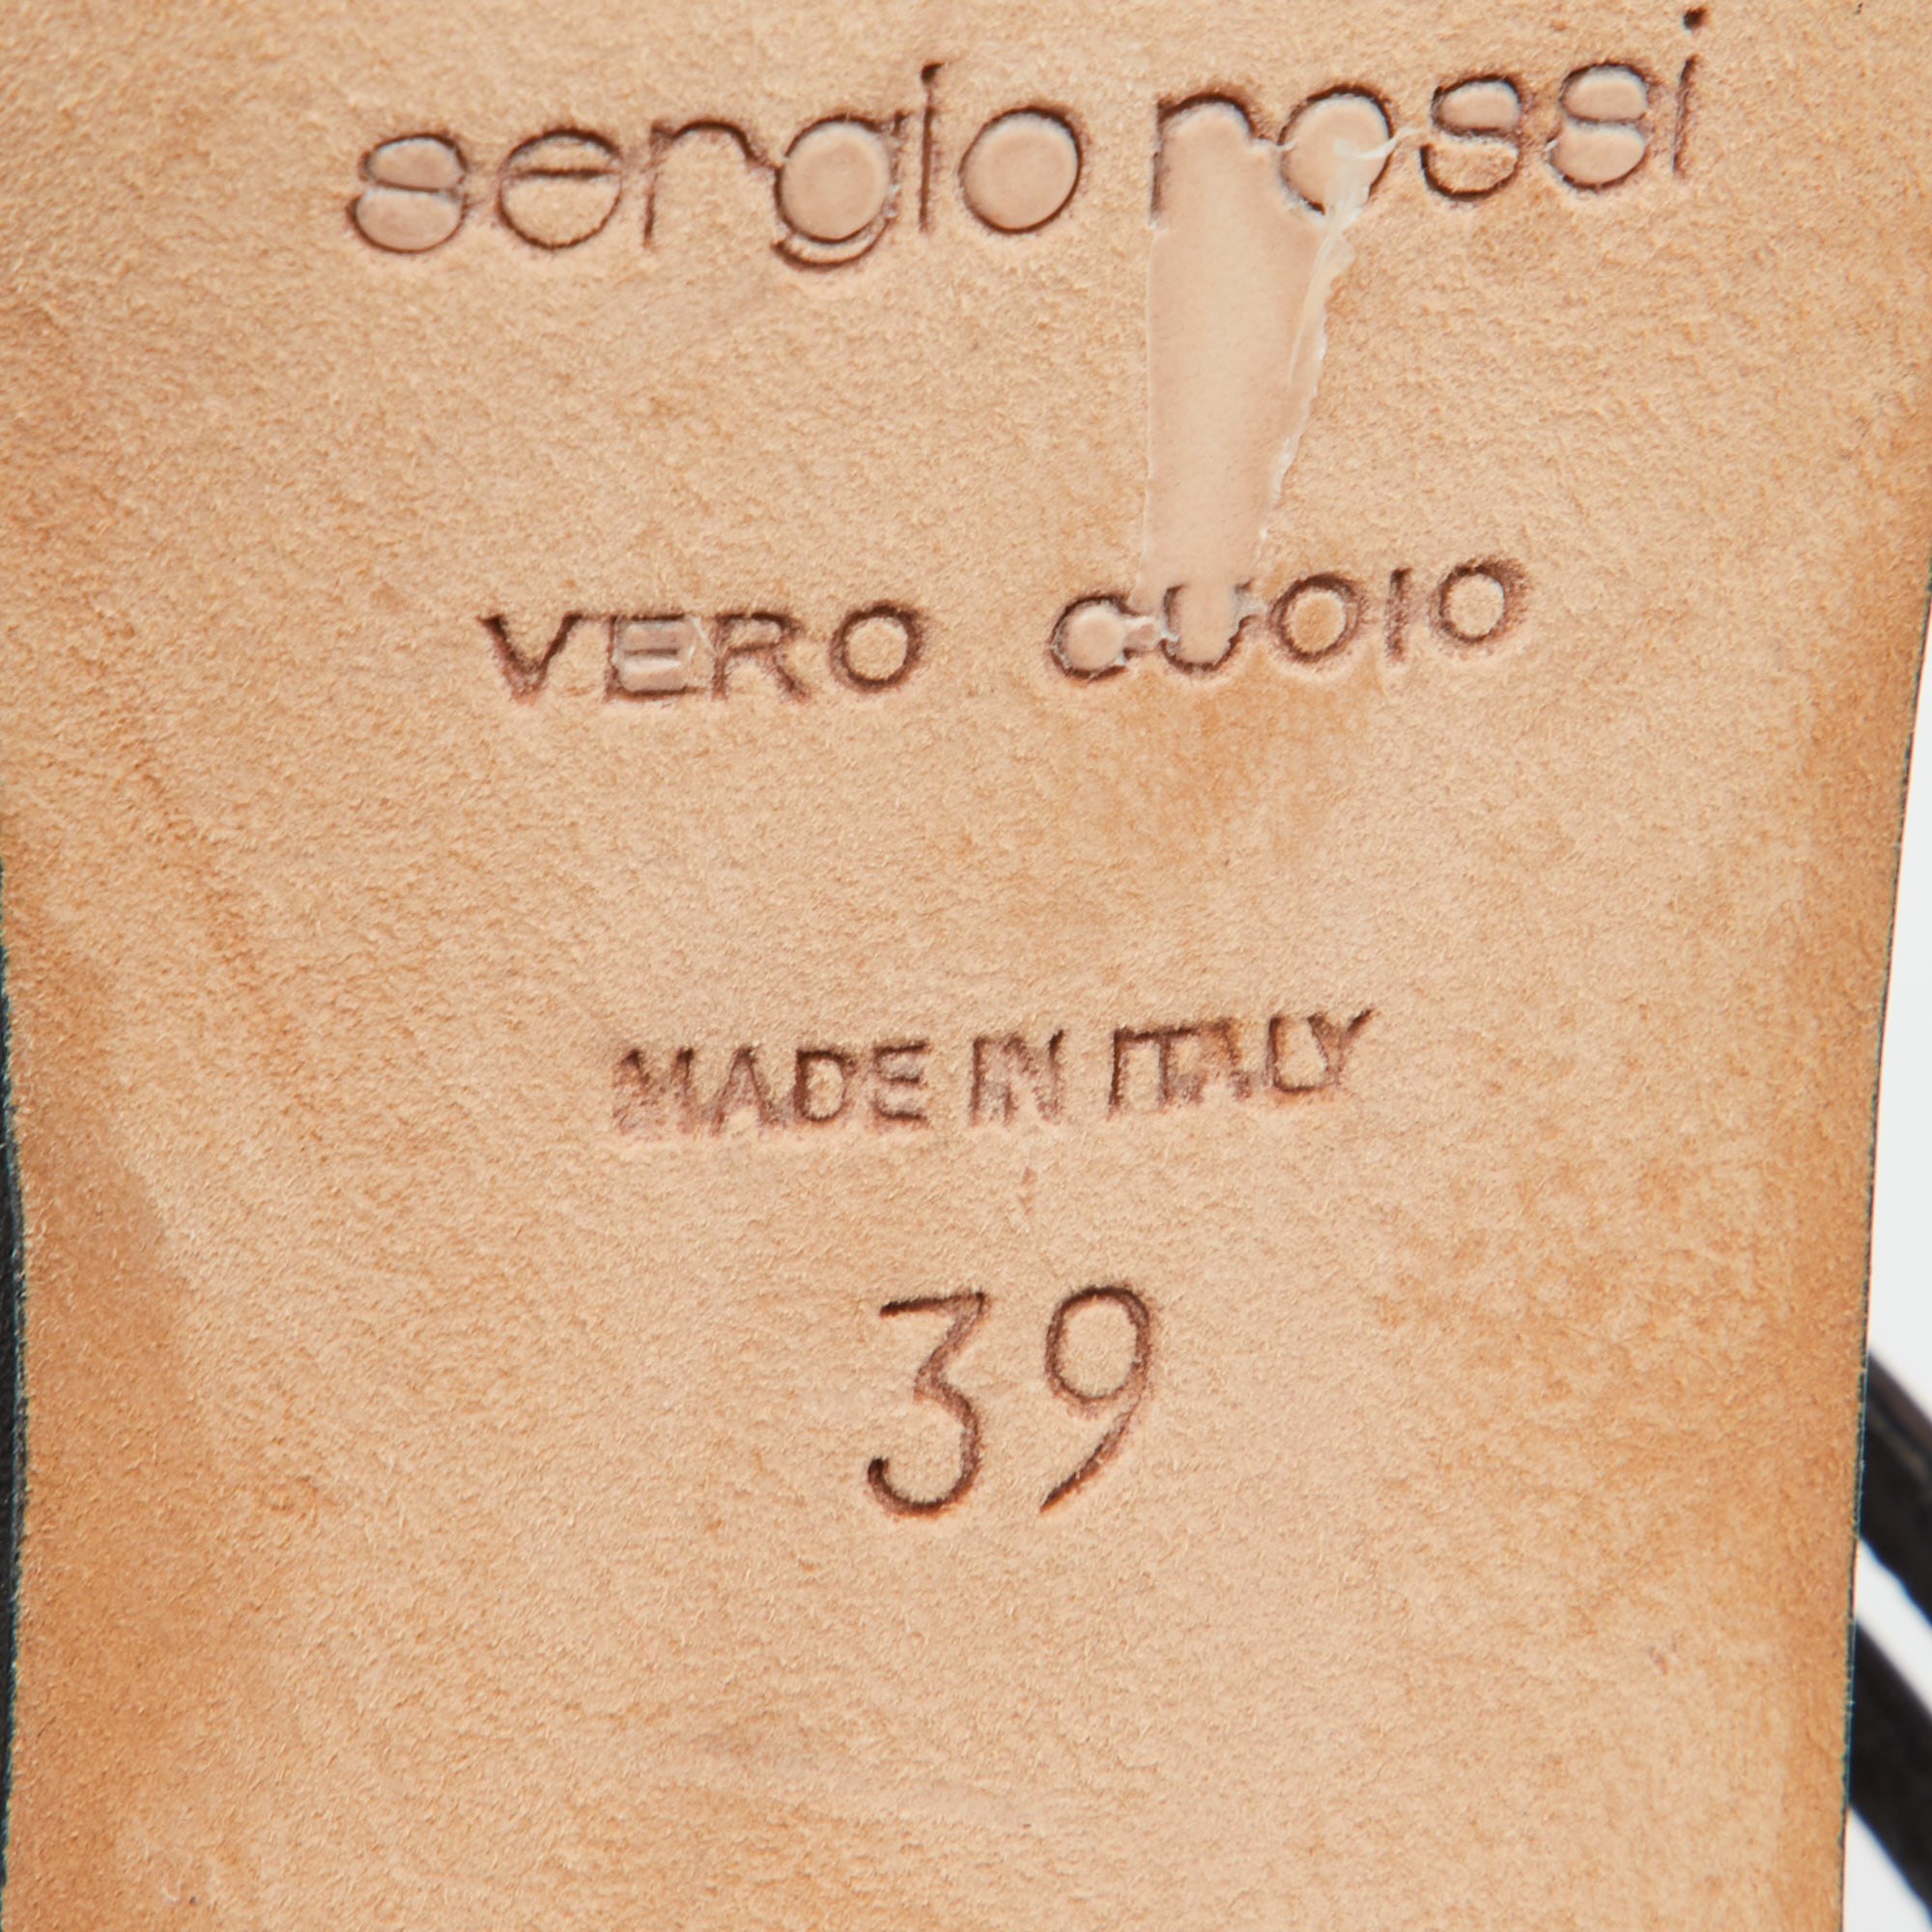 Sergio Rossi Black Leather Strappy Peep Toe Sandals Size 39